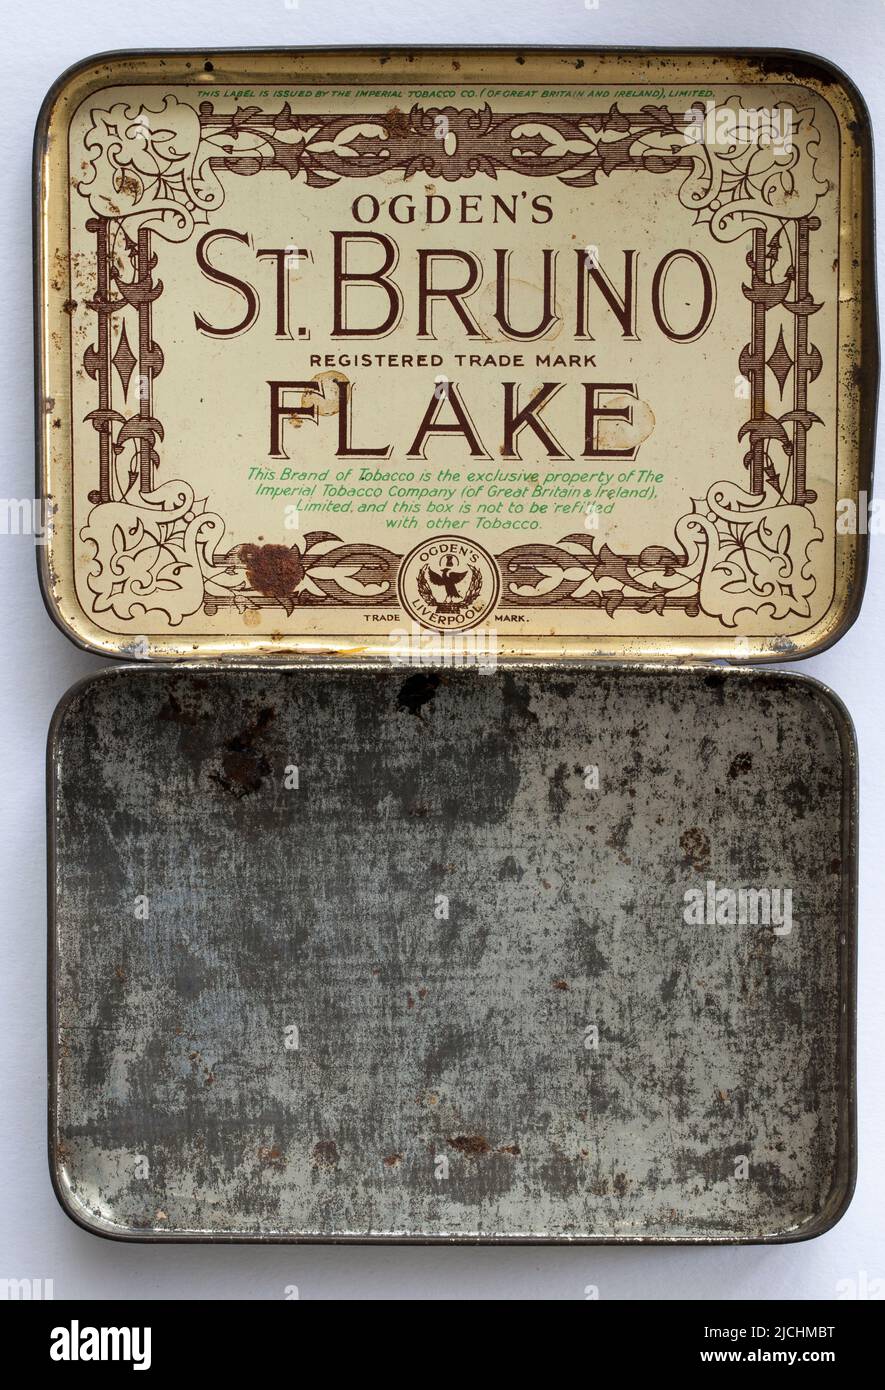 Ogdens St Bruno Flake Tobacco Tin Stock Photo